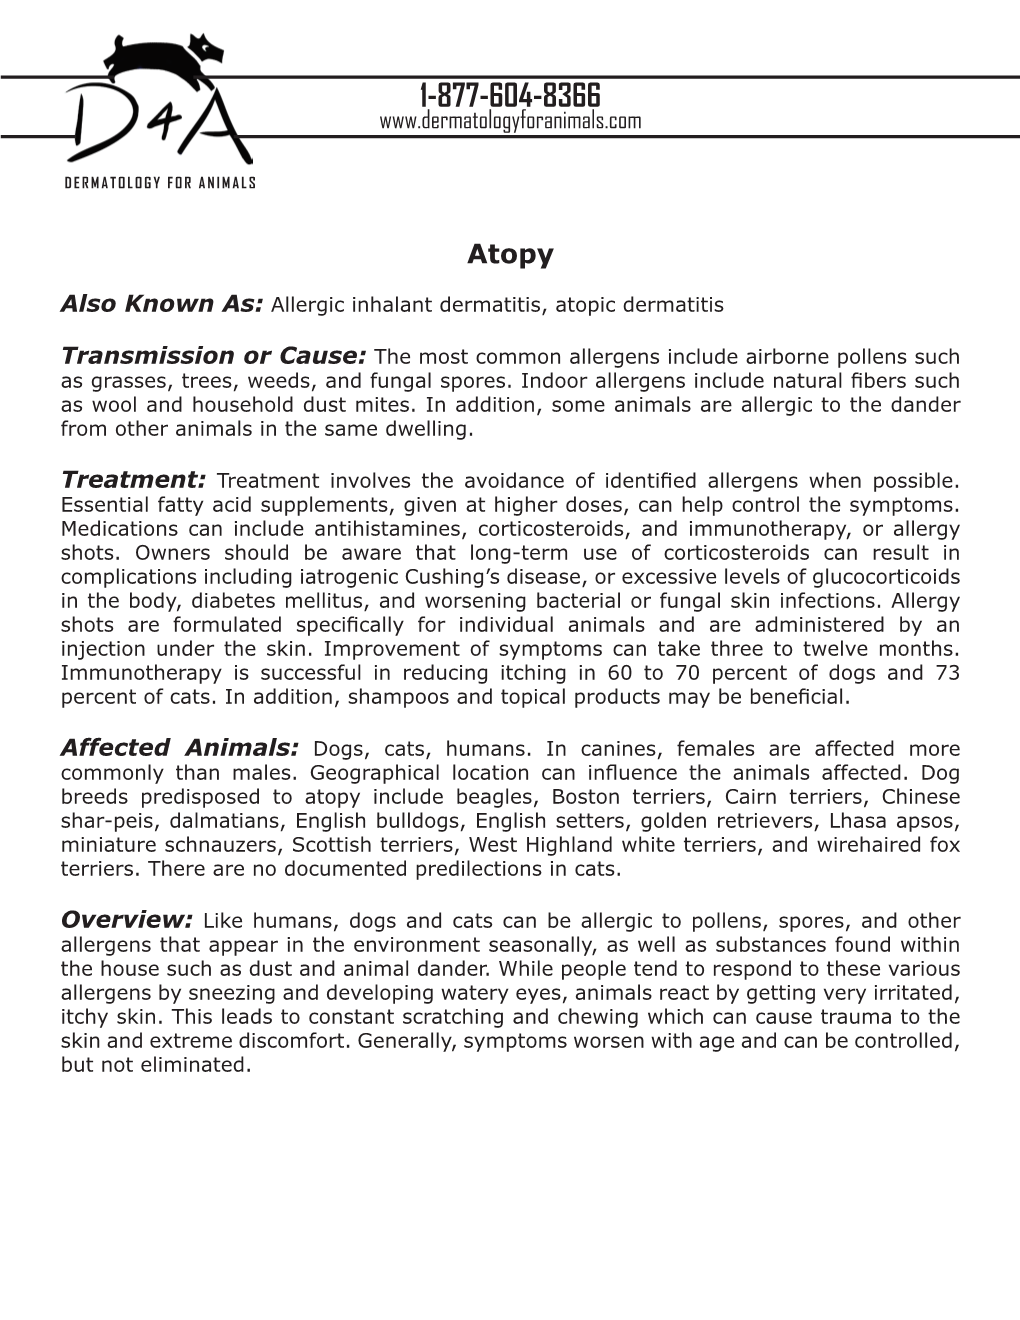 Atopy (Atopic Dermatitis)